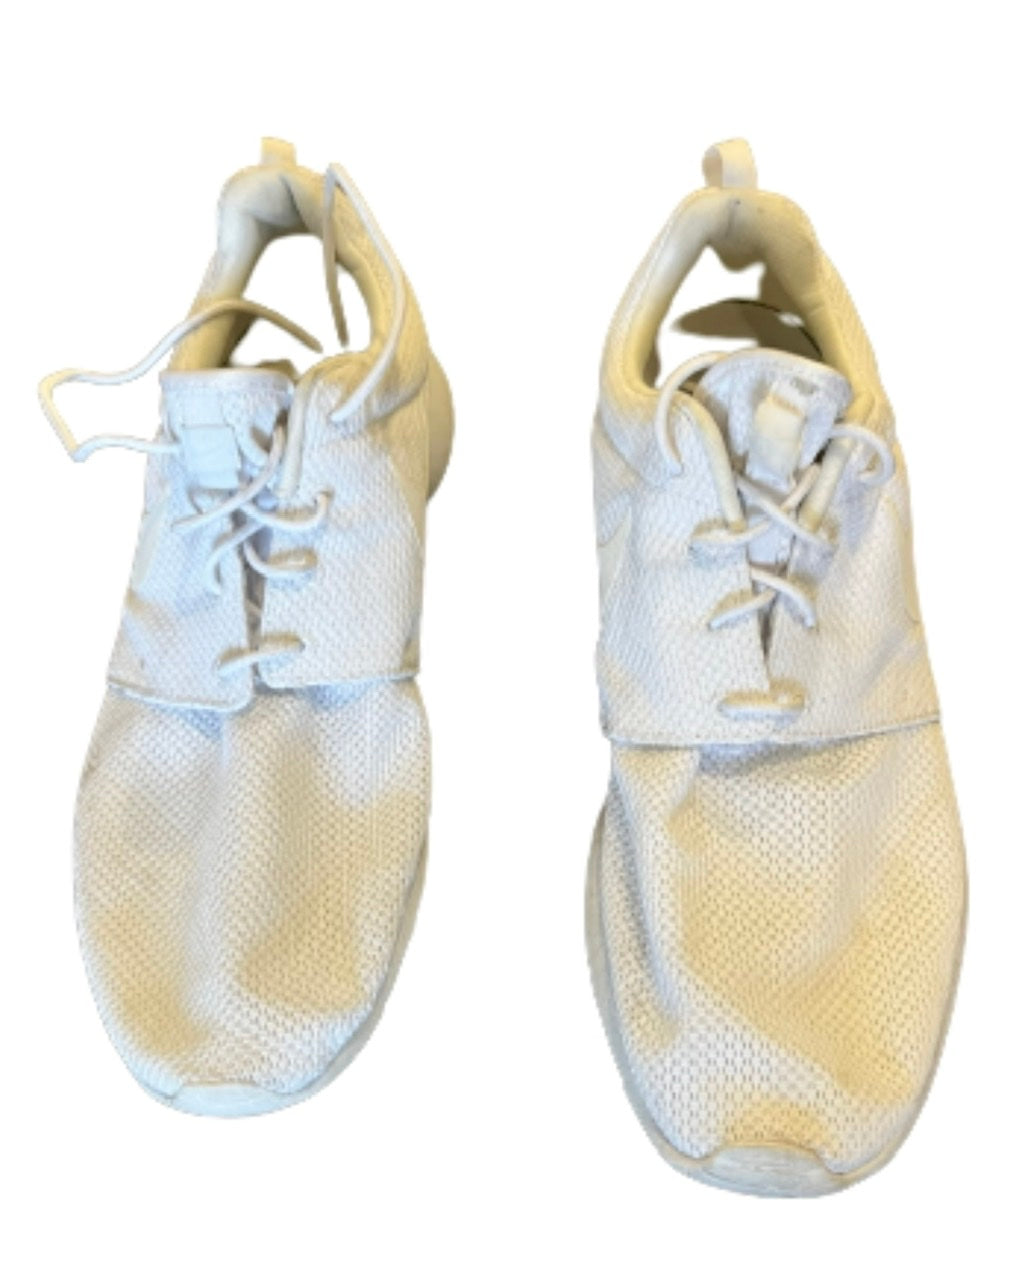 BALLERS: Vernon's White Nike Roche Sneakers